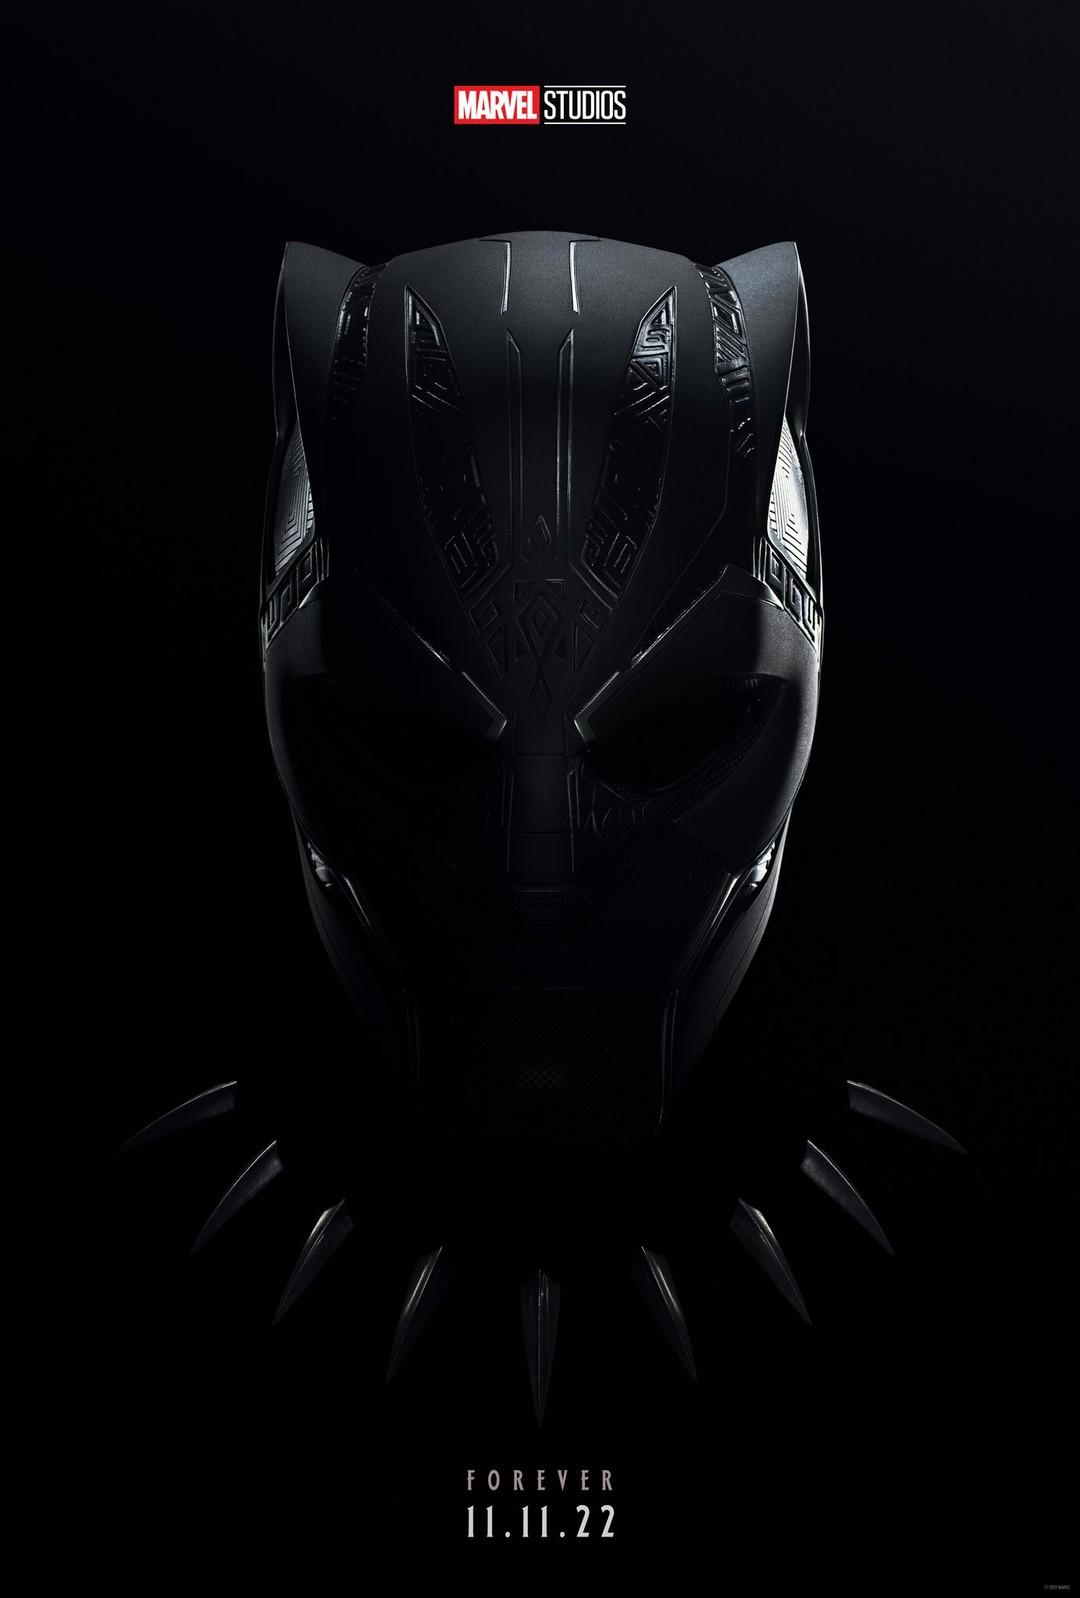 Постер фильма Чёрная Пантера: Ваканда навеки | Black Panther Wakanda Forever